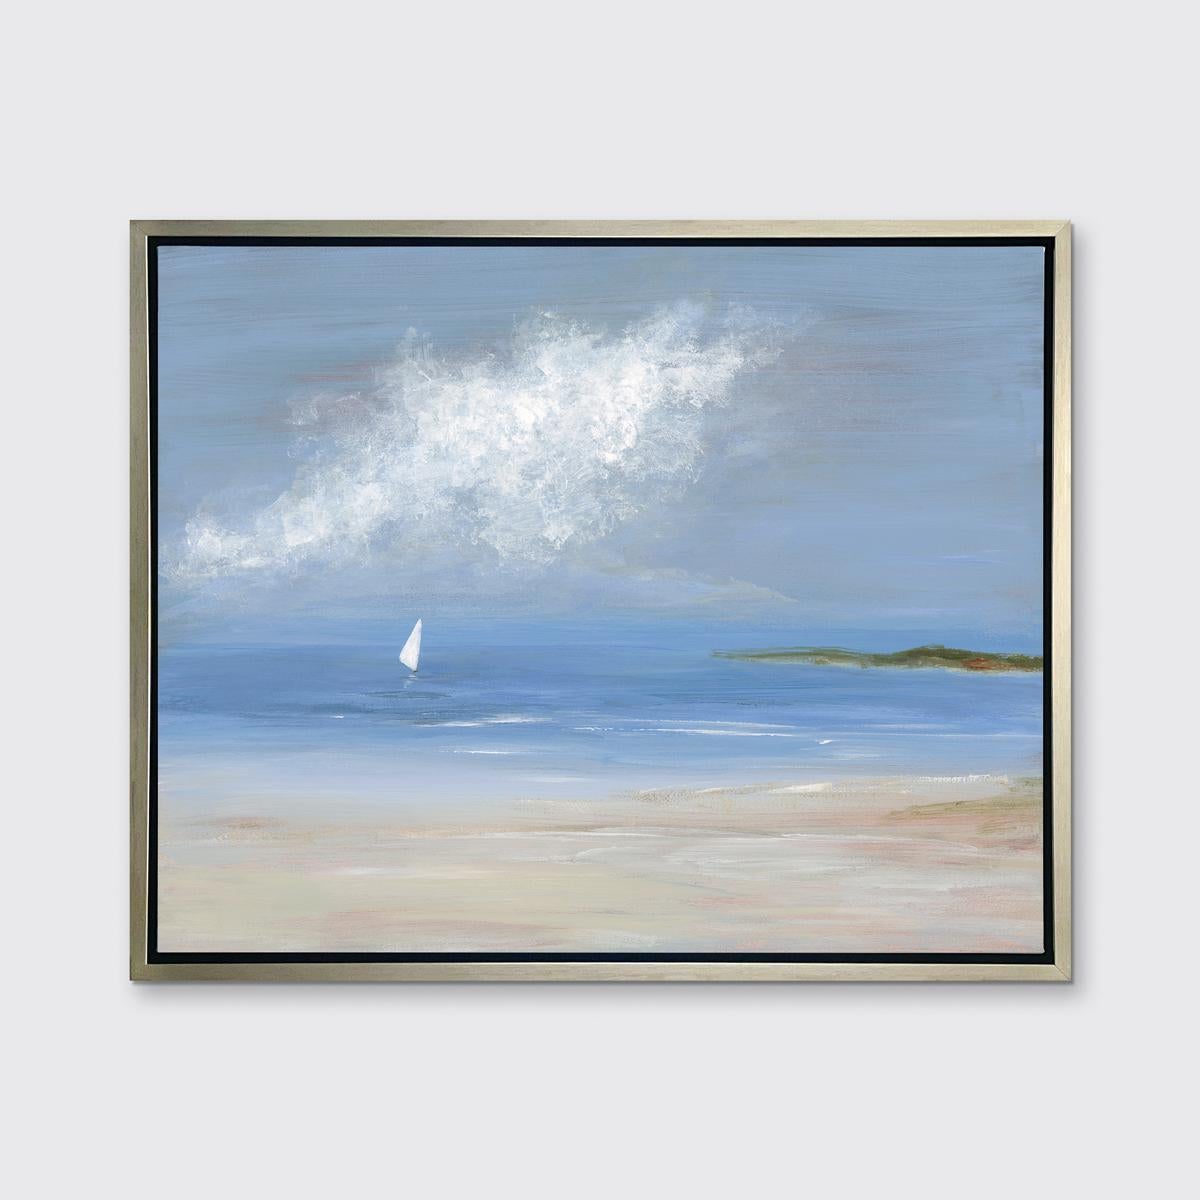 S. Cora Aldo Landscape Print - "Sunday Sail, " Framed Limited Edition Giclee Print, 16" x 20"